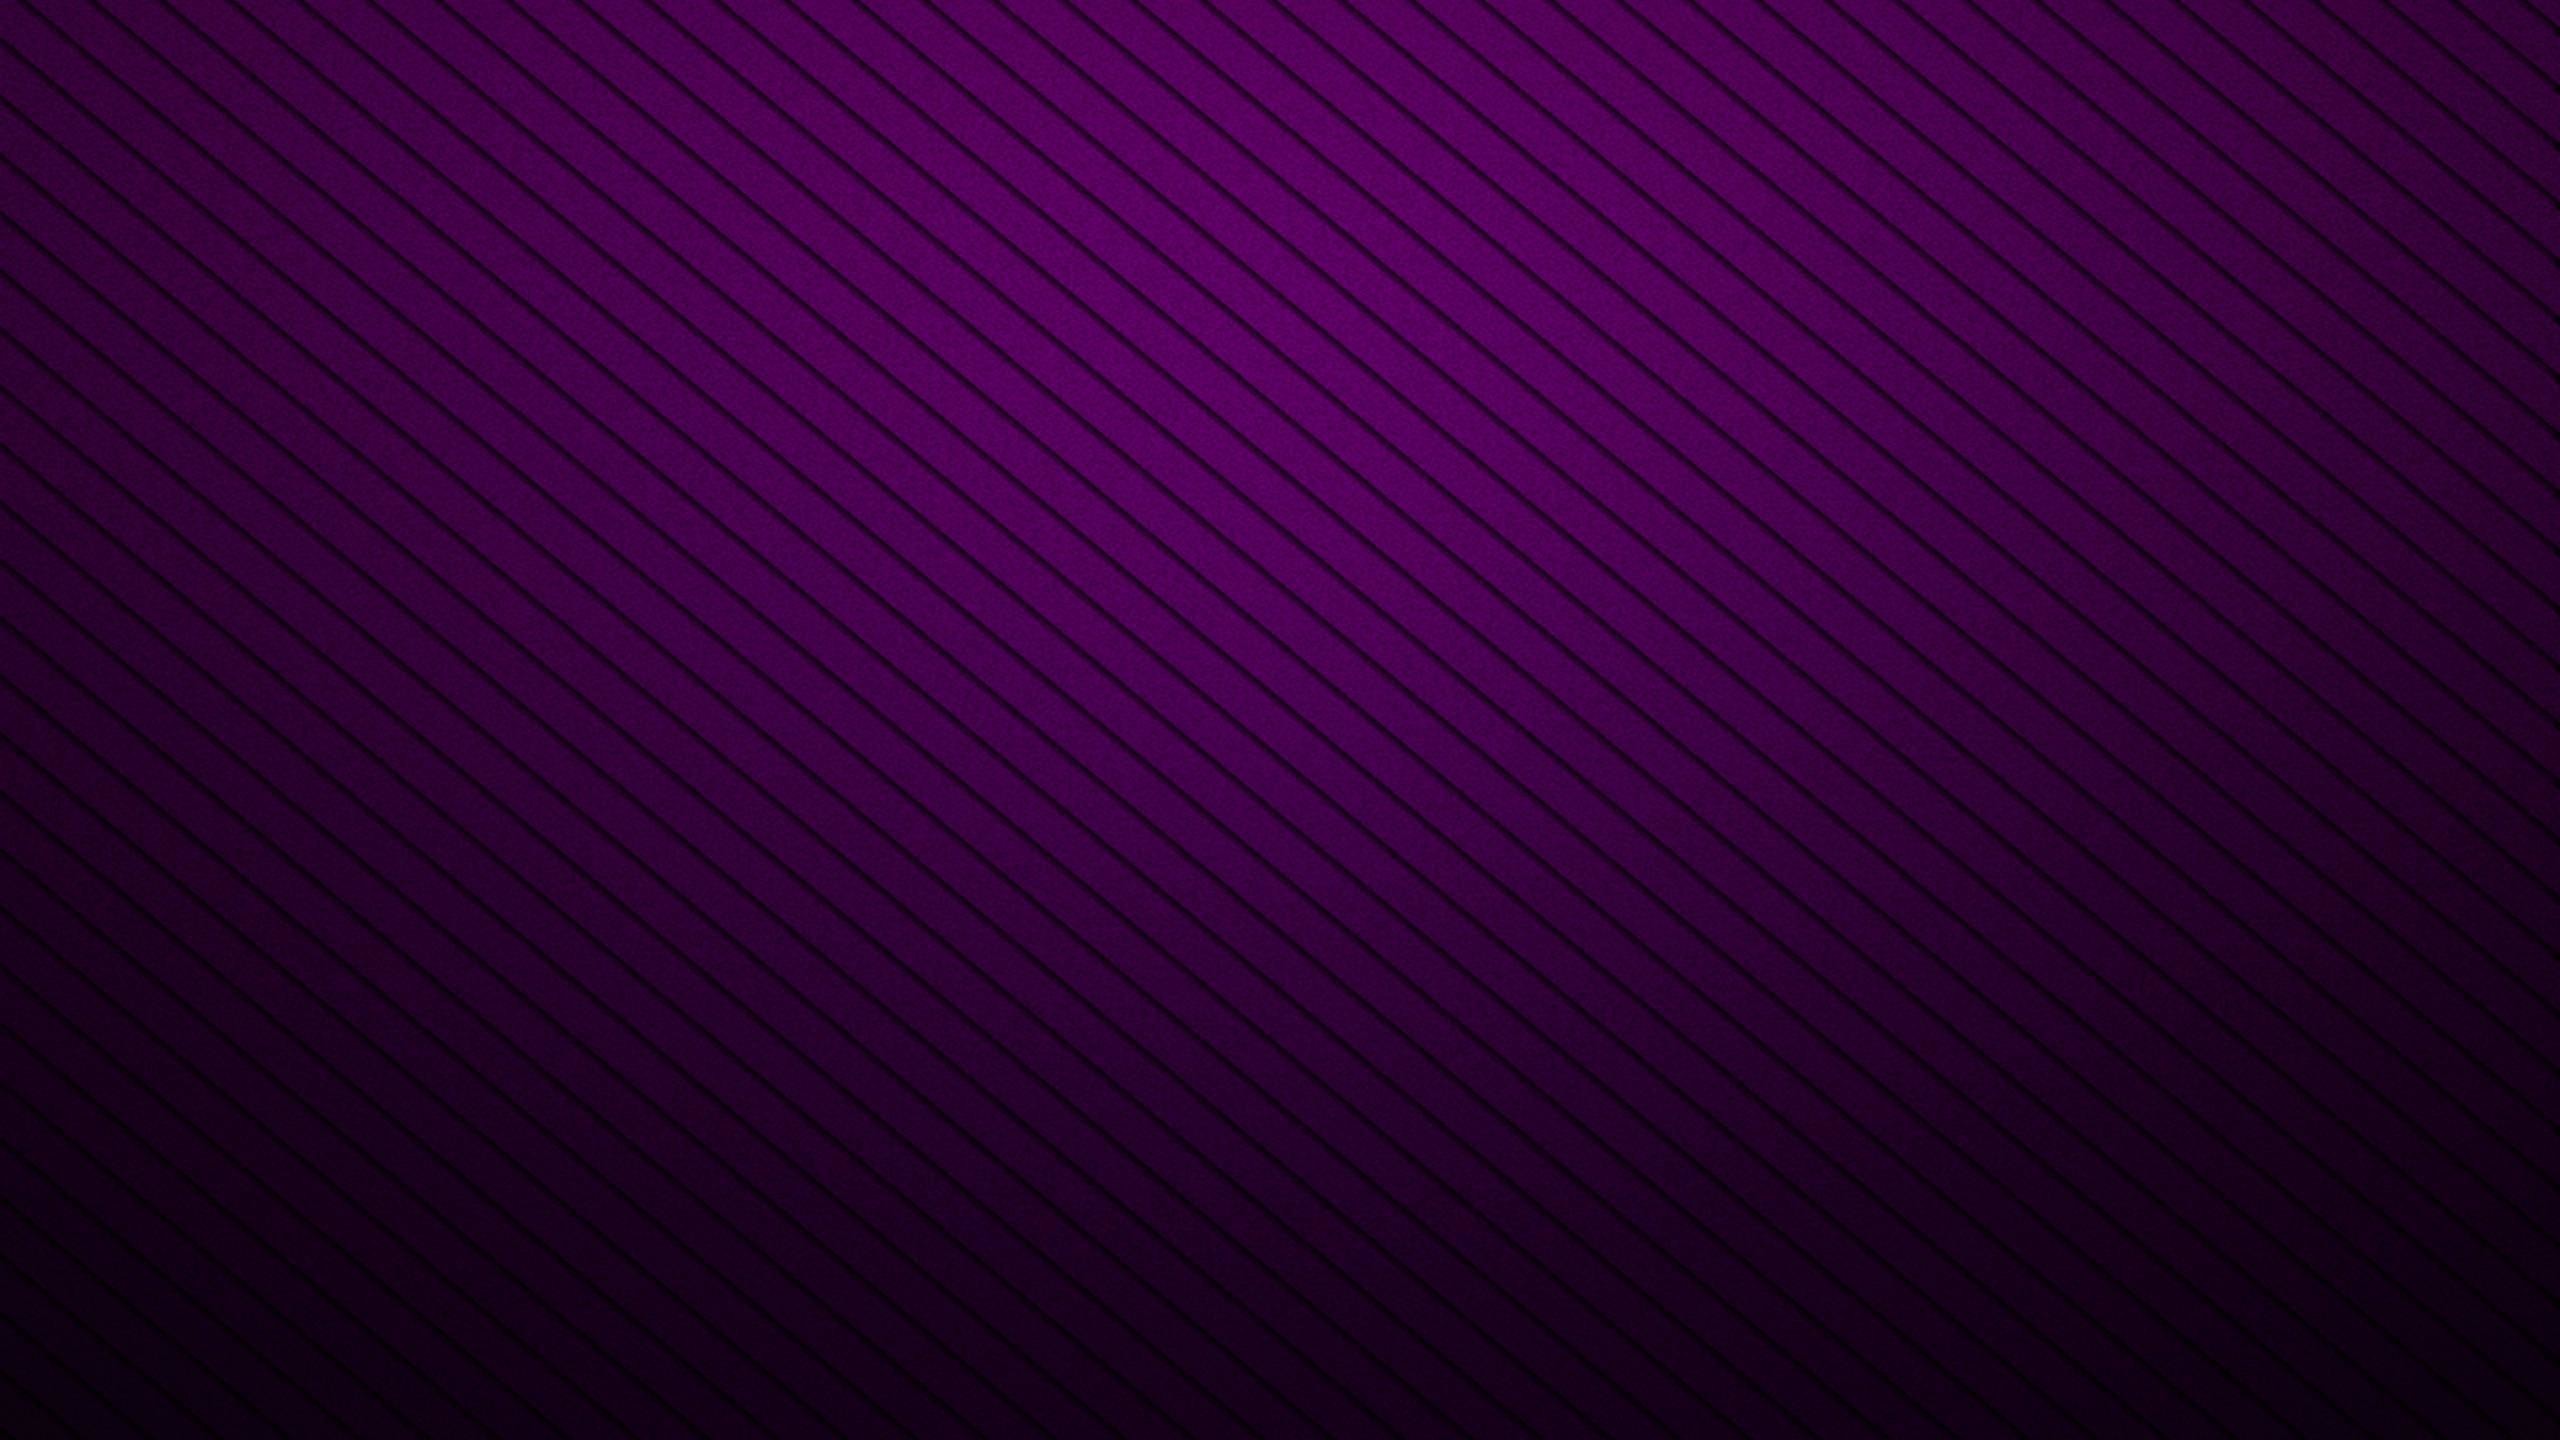 2560x1440 Purple and Black Wallpaper